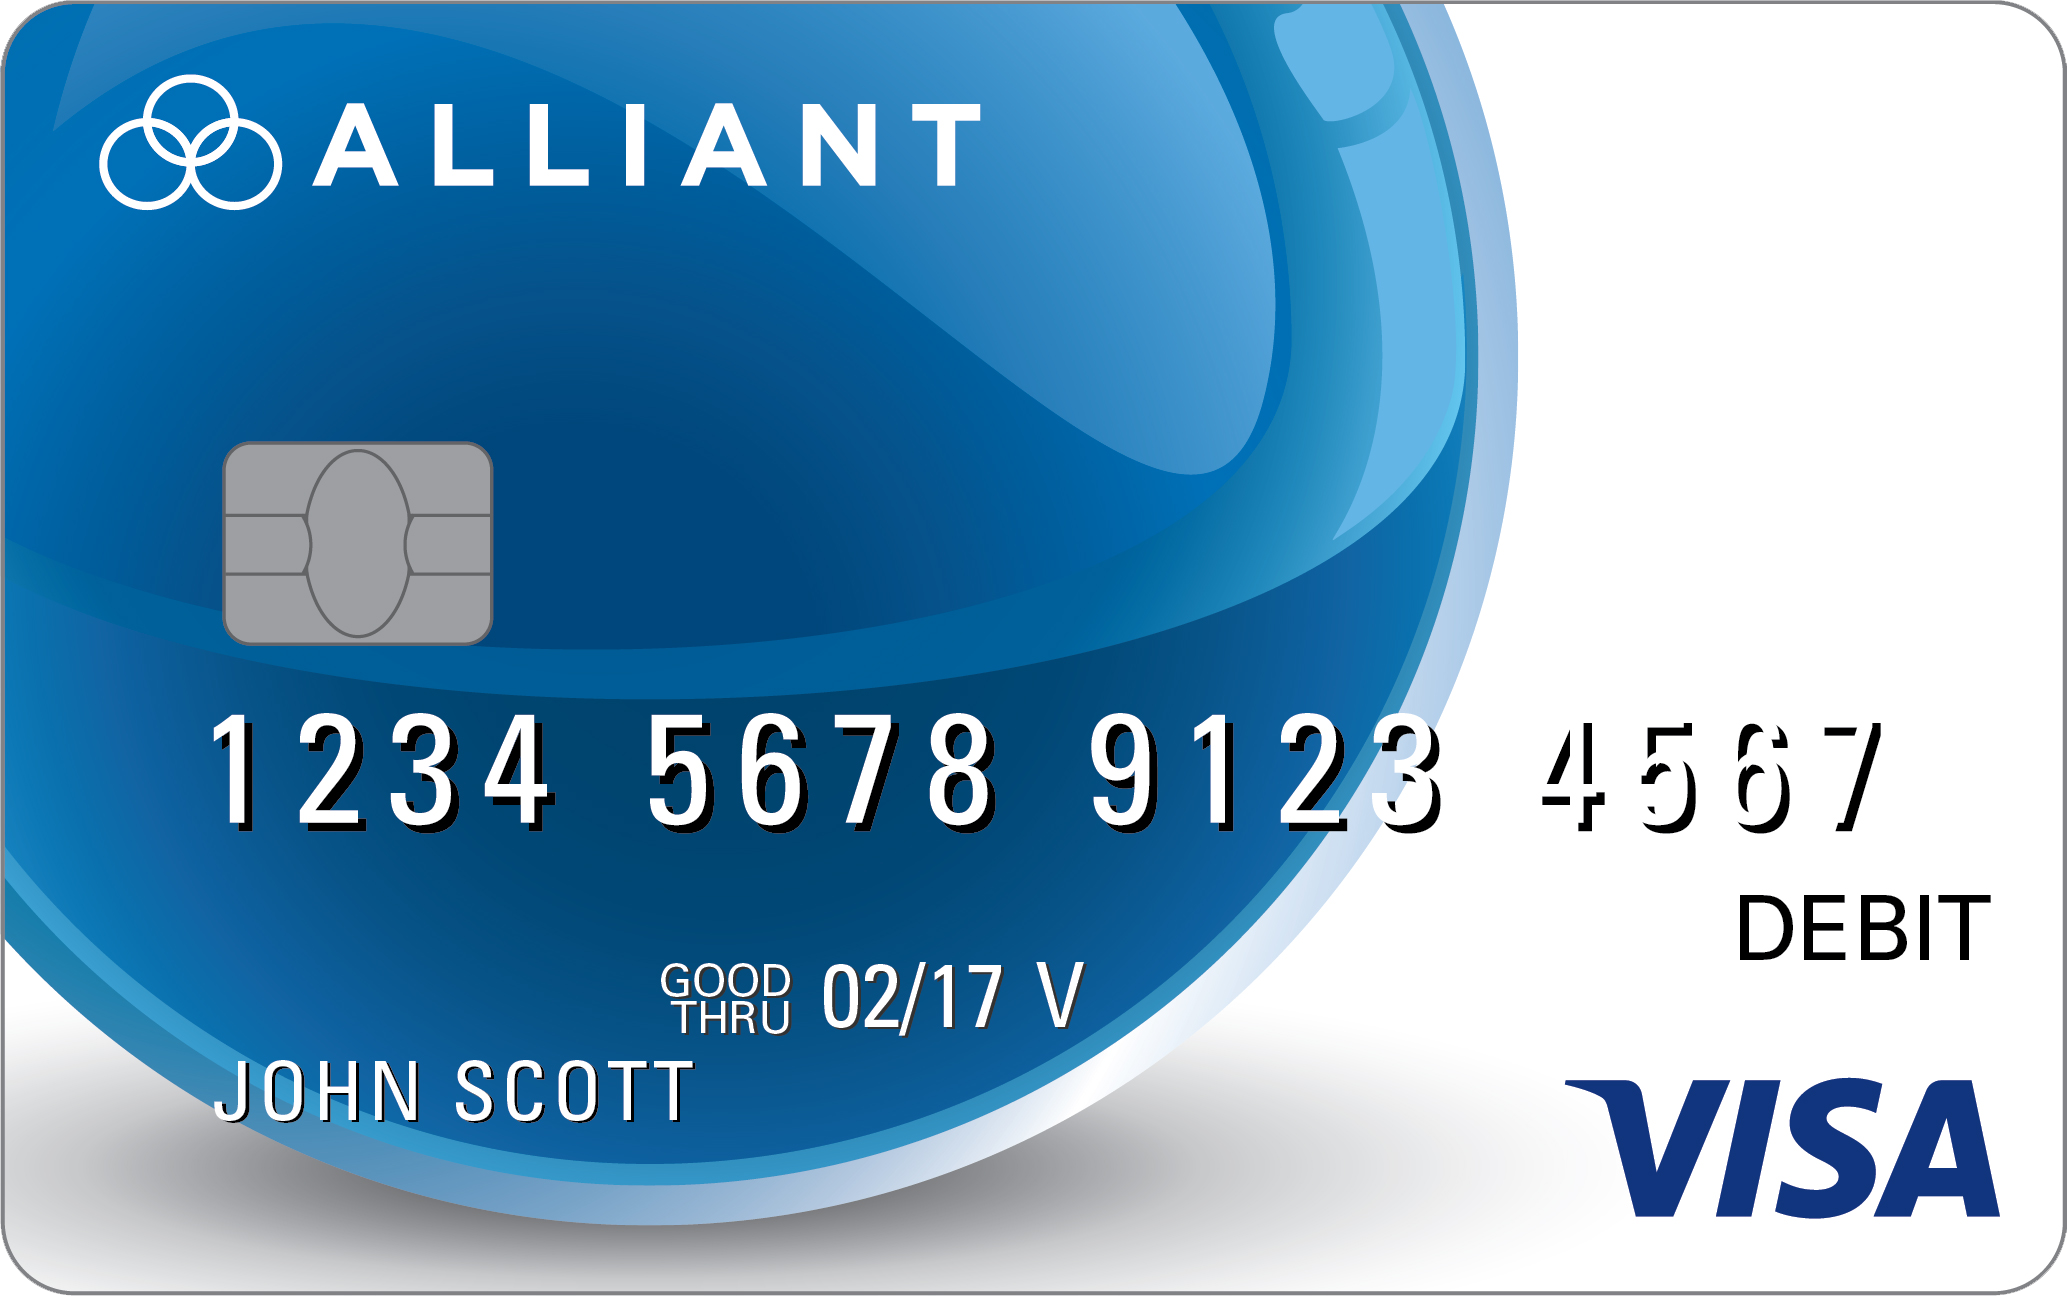 Credit Card Union. Alliant c.u. credit Card. BBVA Debit Classic Card. Royal credit Union Card. T me visa debit